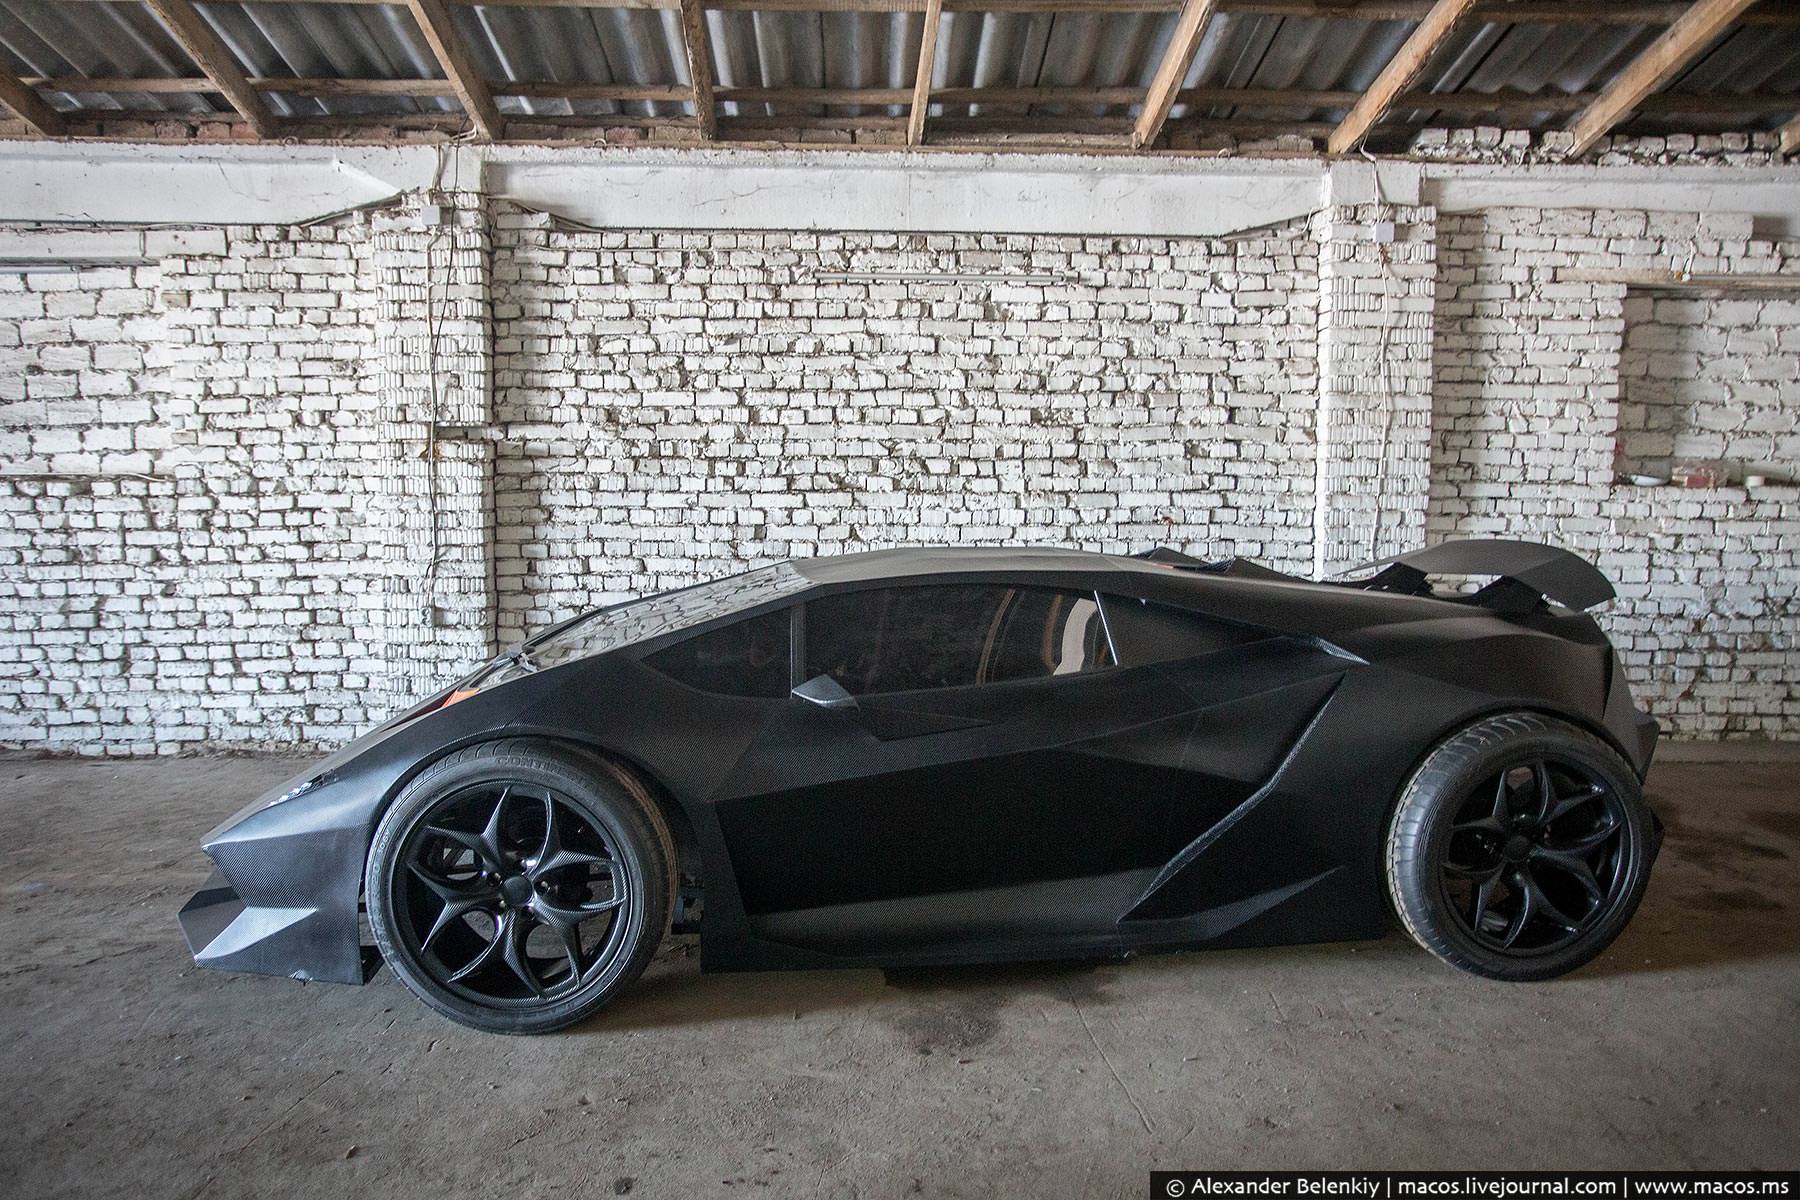 Hobbyists build epic Lamborghini replica - Carfanatics Blog